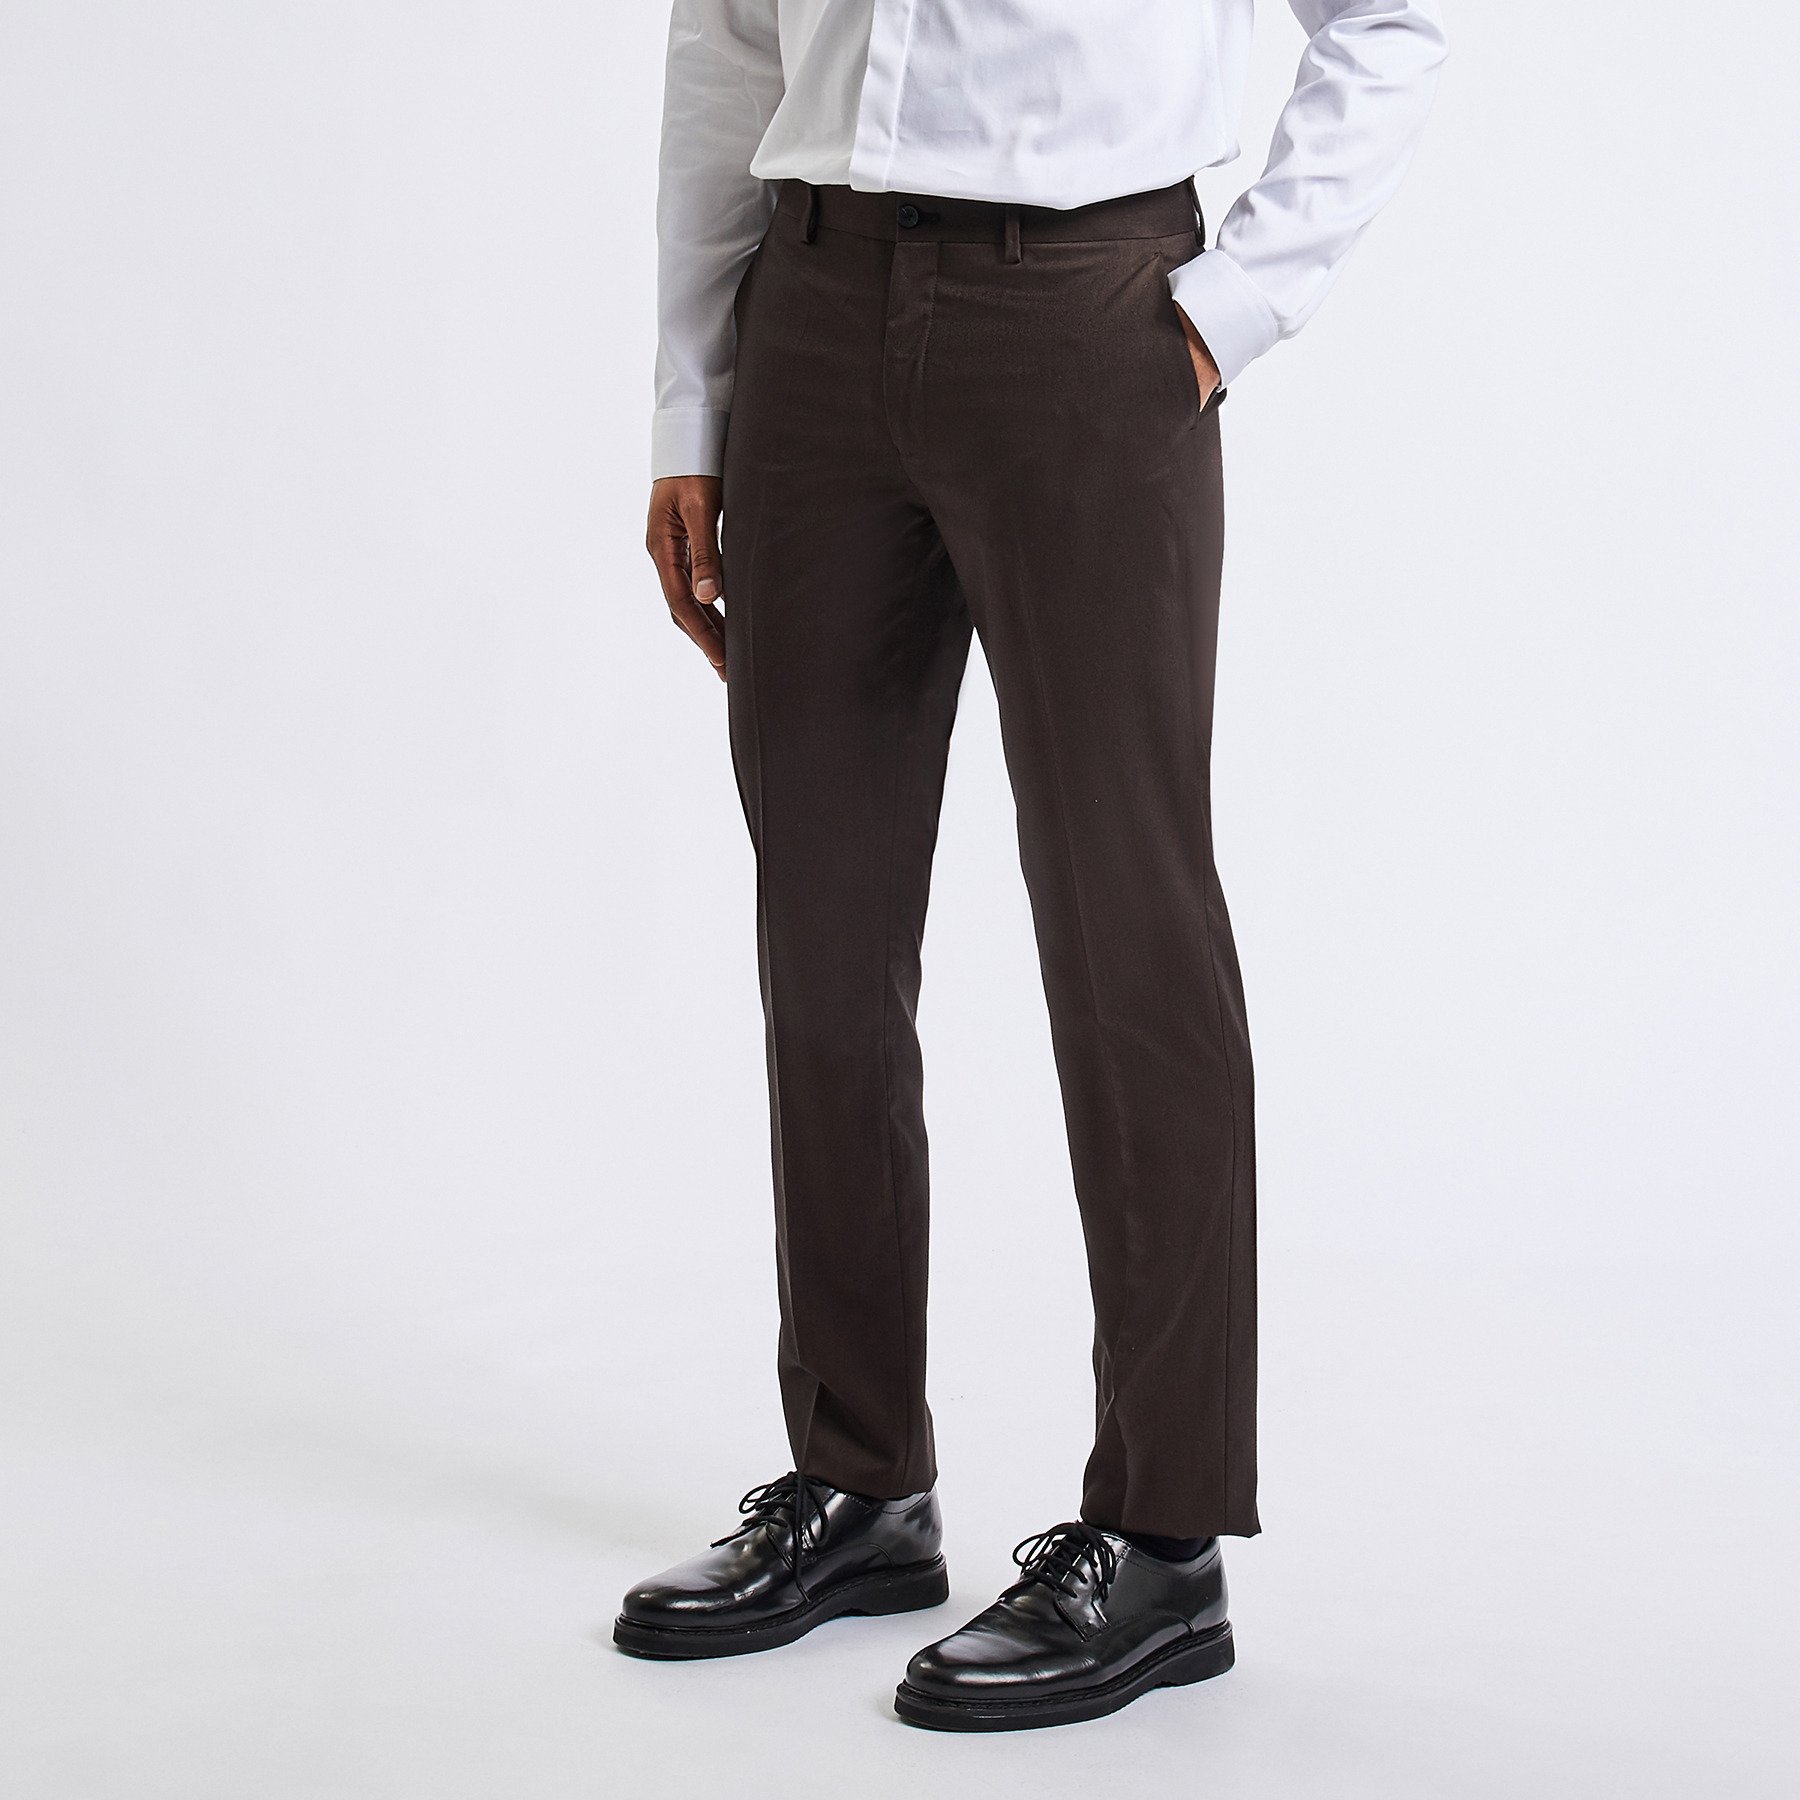 Pantalon de costume slim Marron 36 80% Polyester, 17% Viscose, 3% Elasthanne Homme Brice